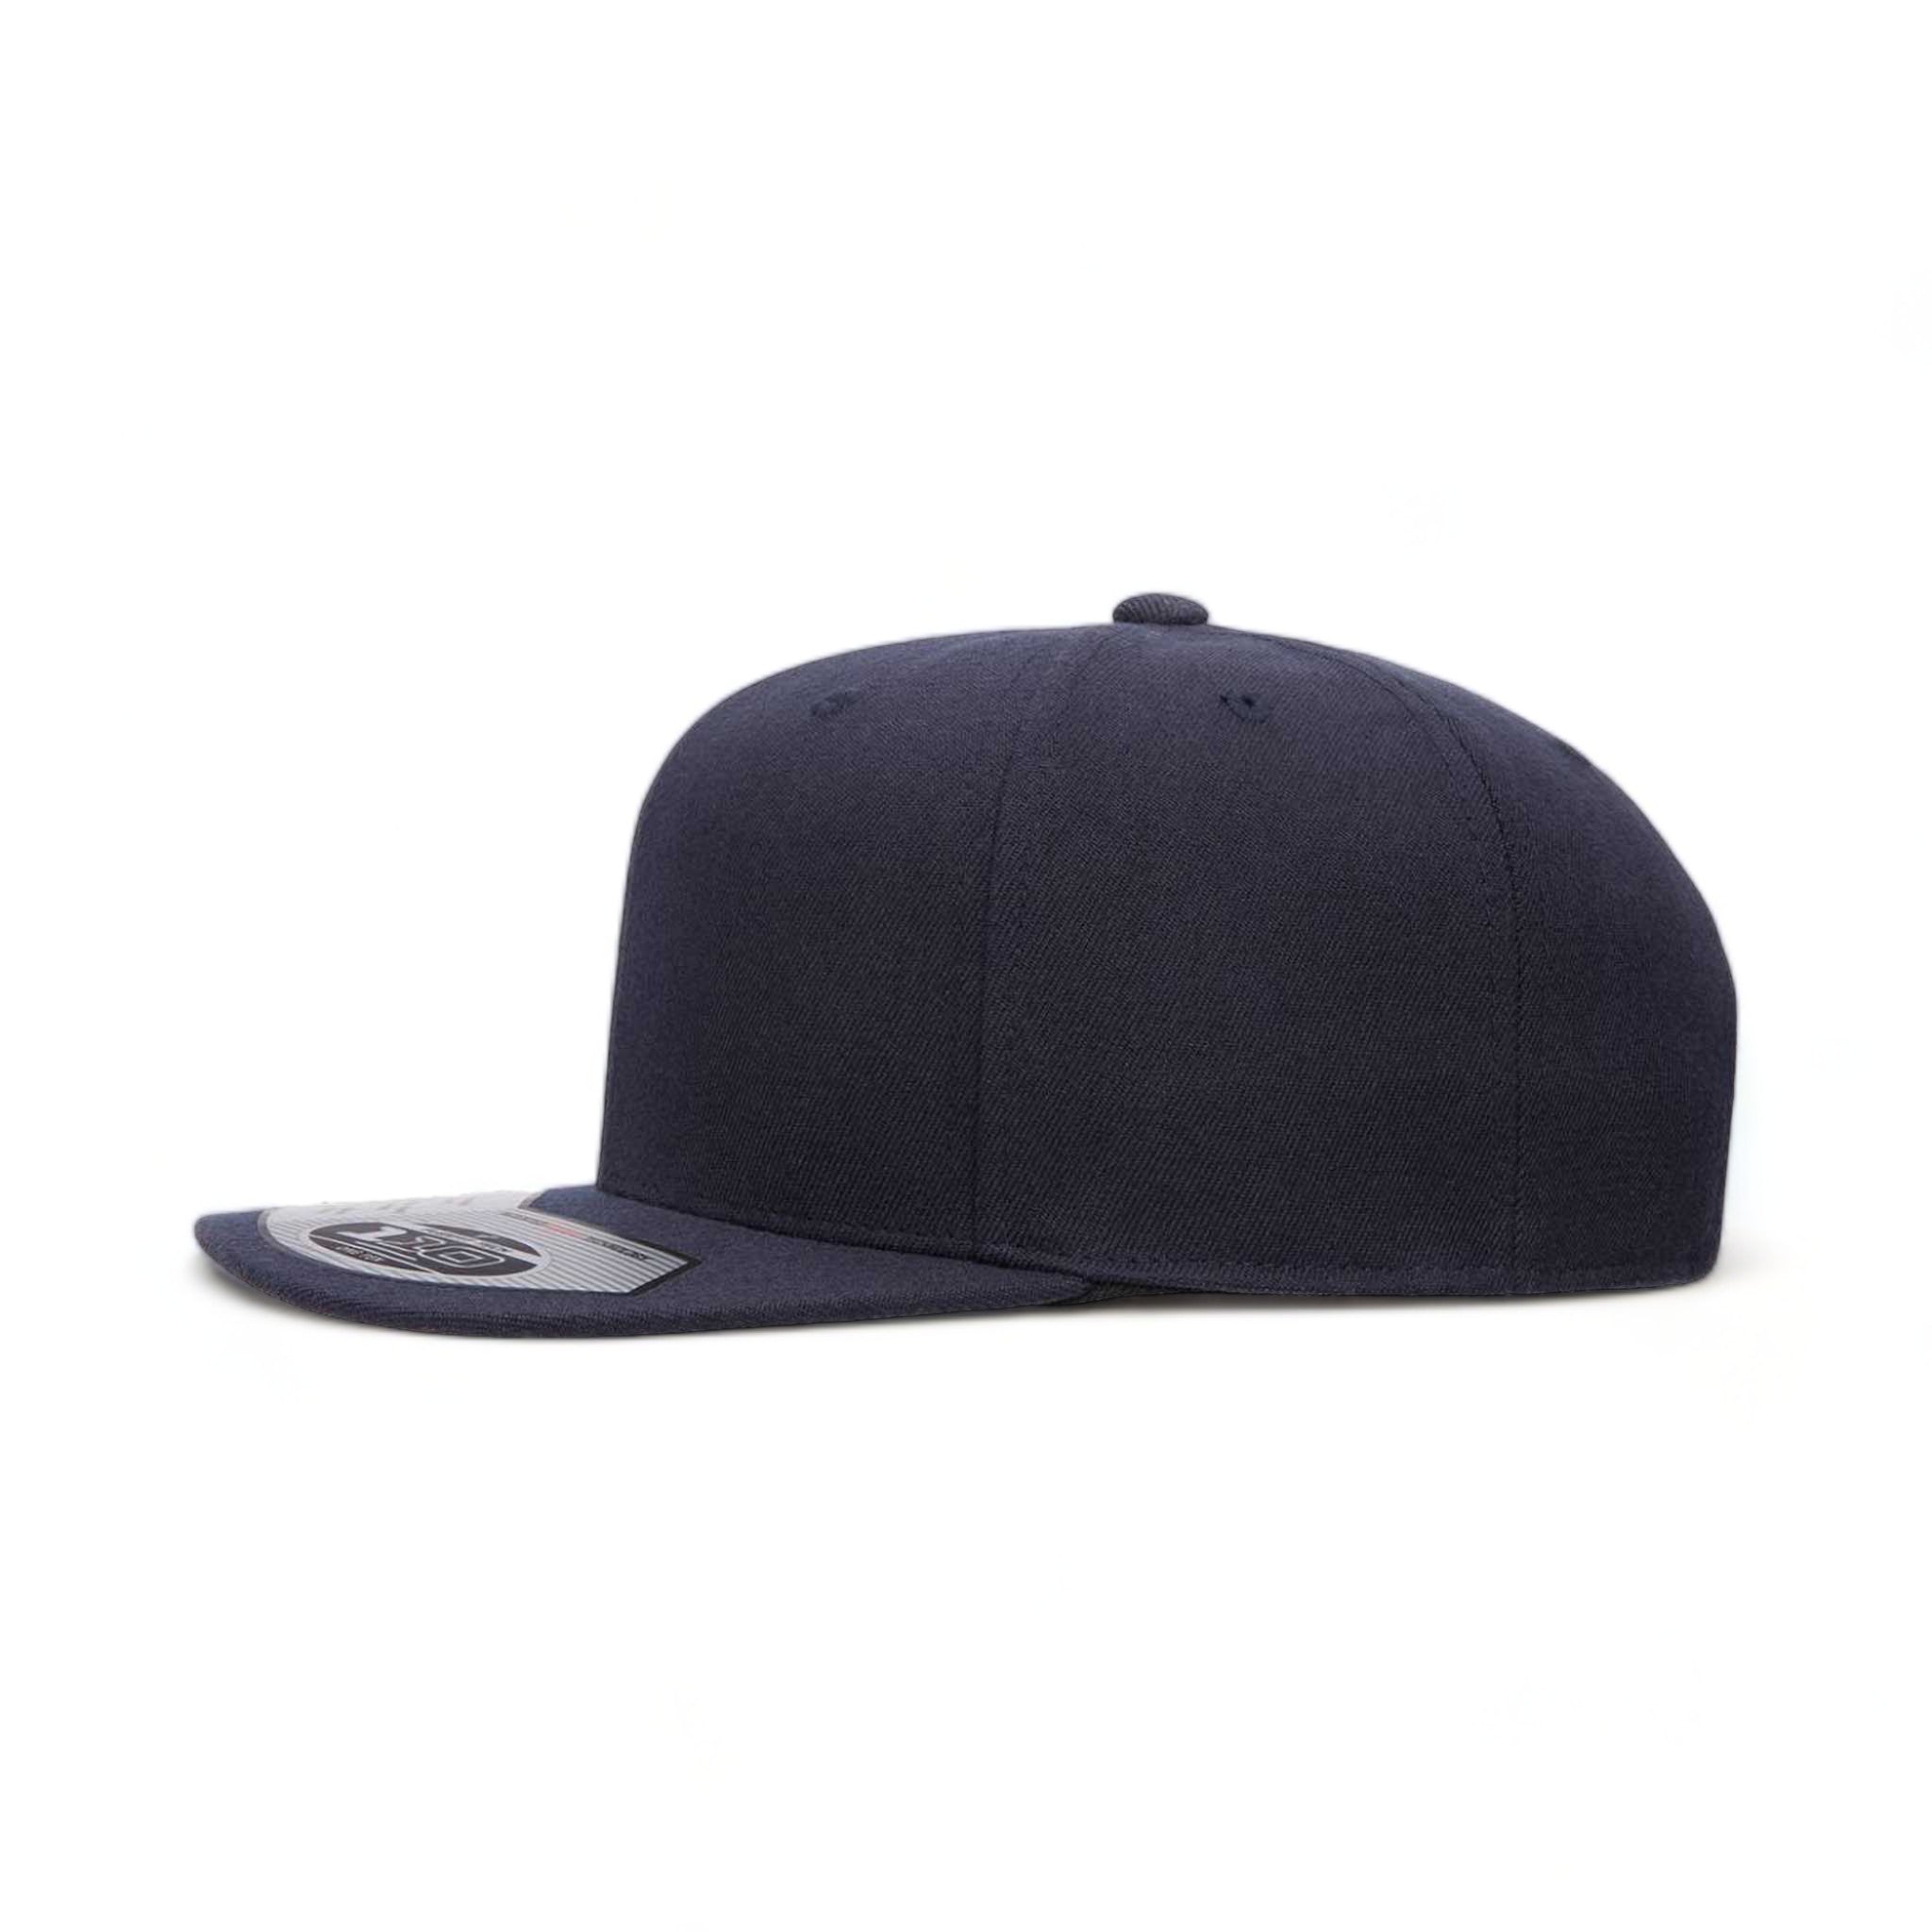 Side view of Flexfit 110F custom hat in dark navy